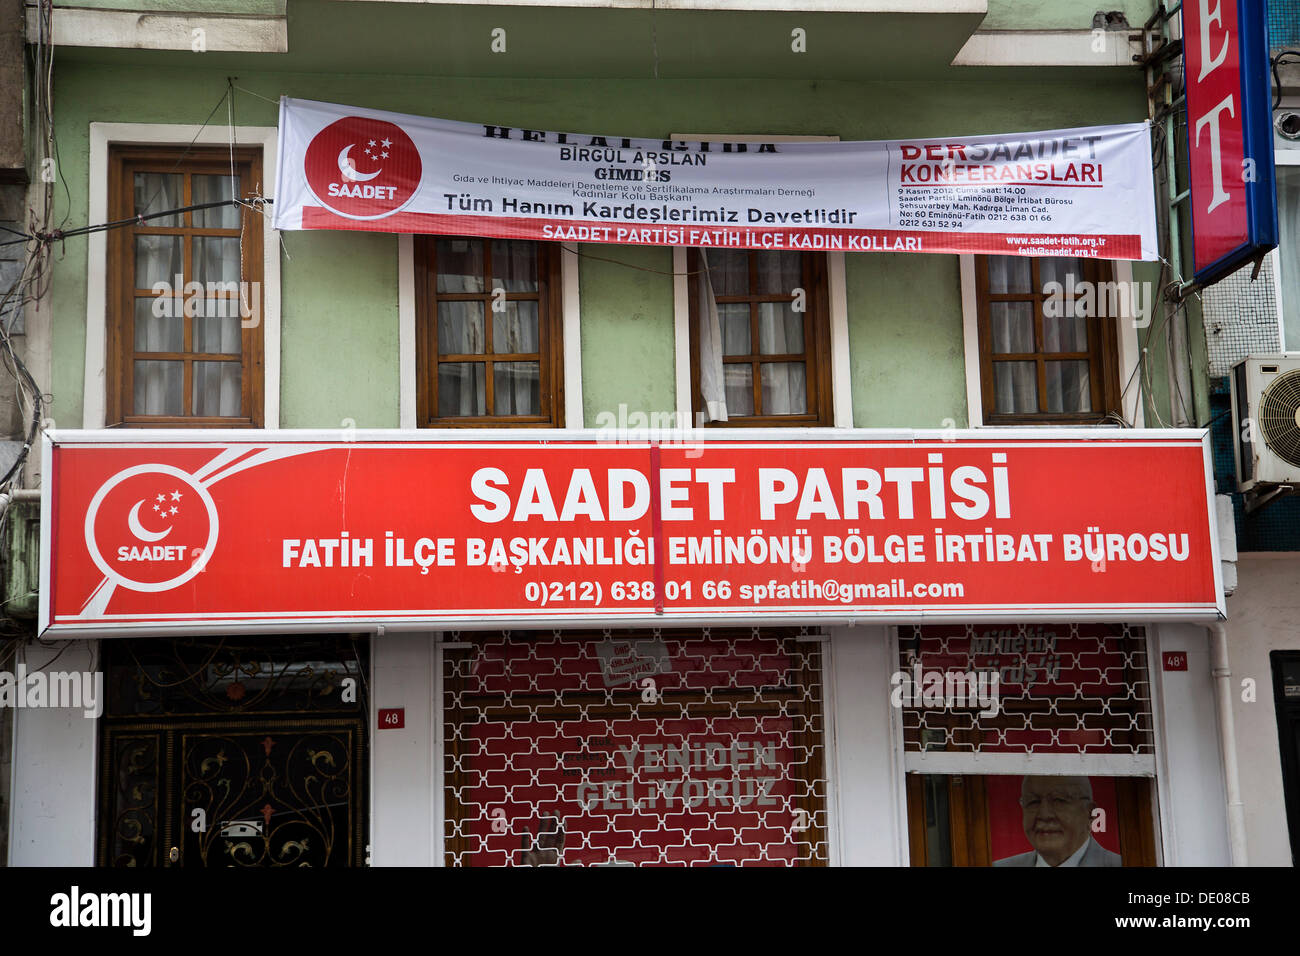 Büro der radikalen islamistischen Saadet Partisi Partei, Istanbul, Türkei Stockfoto